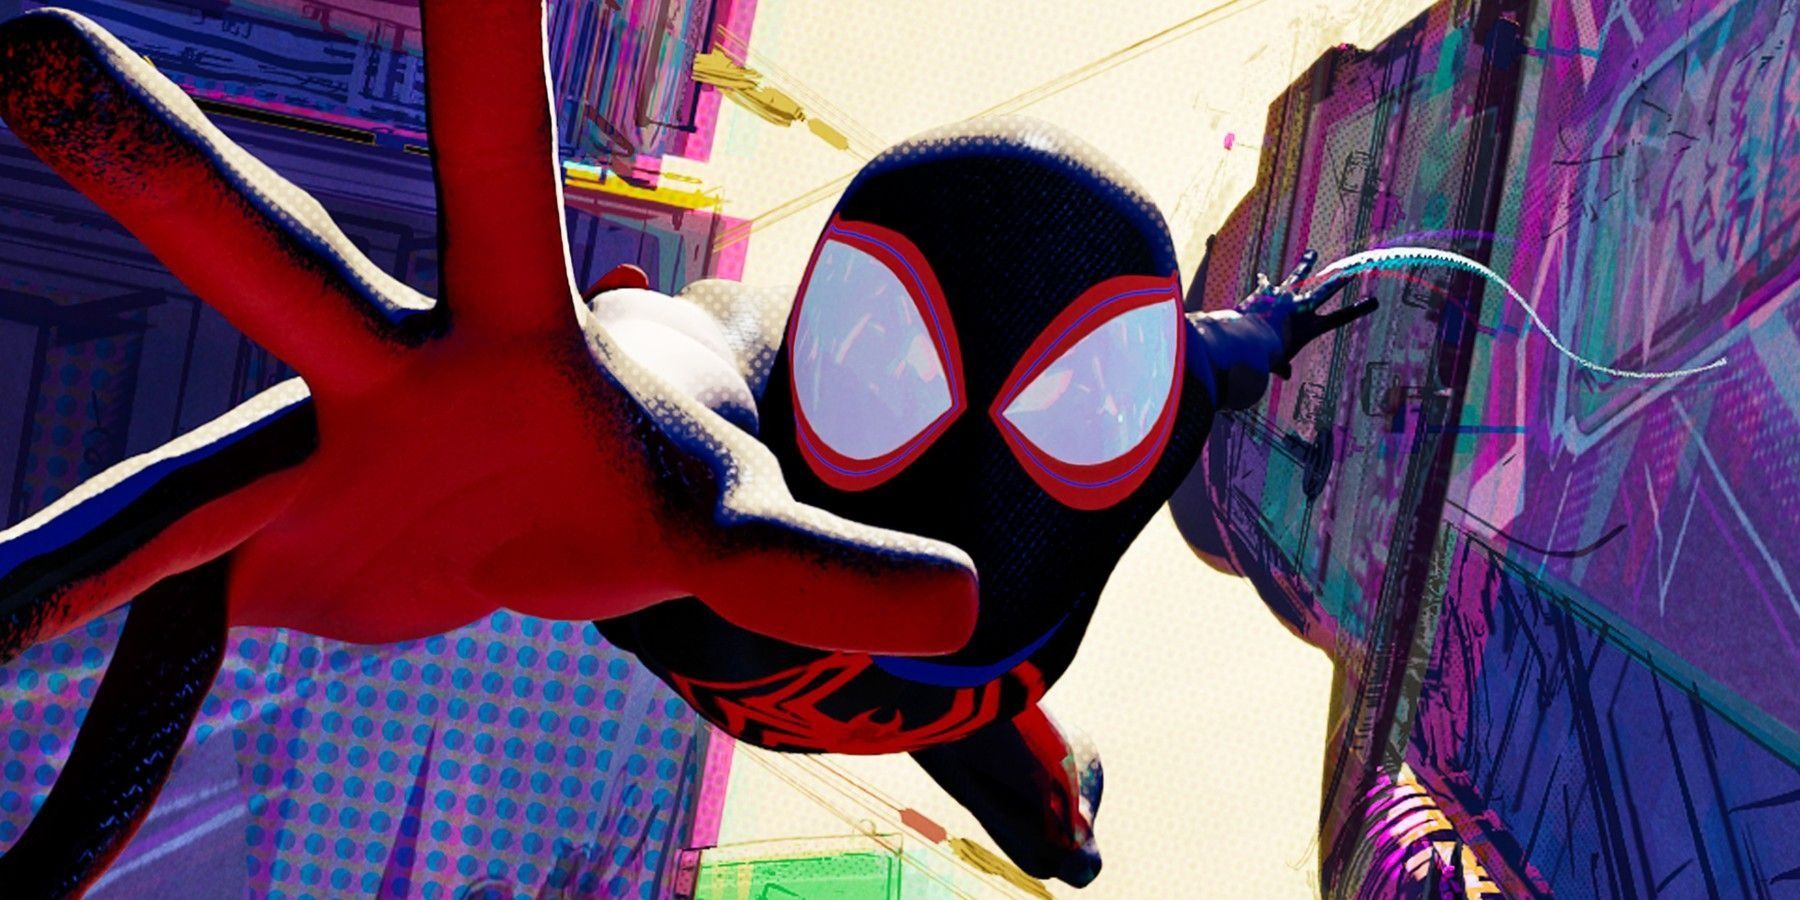 Spider-Man: Across the Spider-Verse Digital, 4K, & Blu-Ray Release Date Set